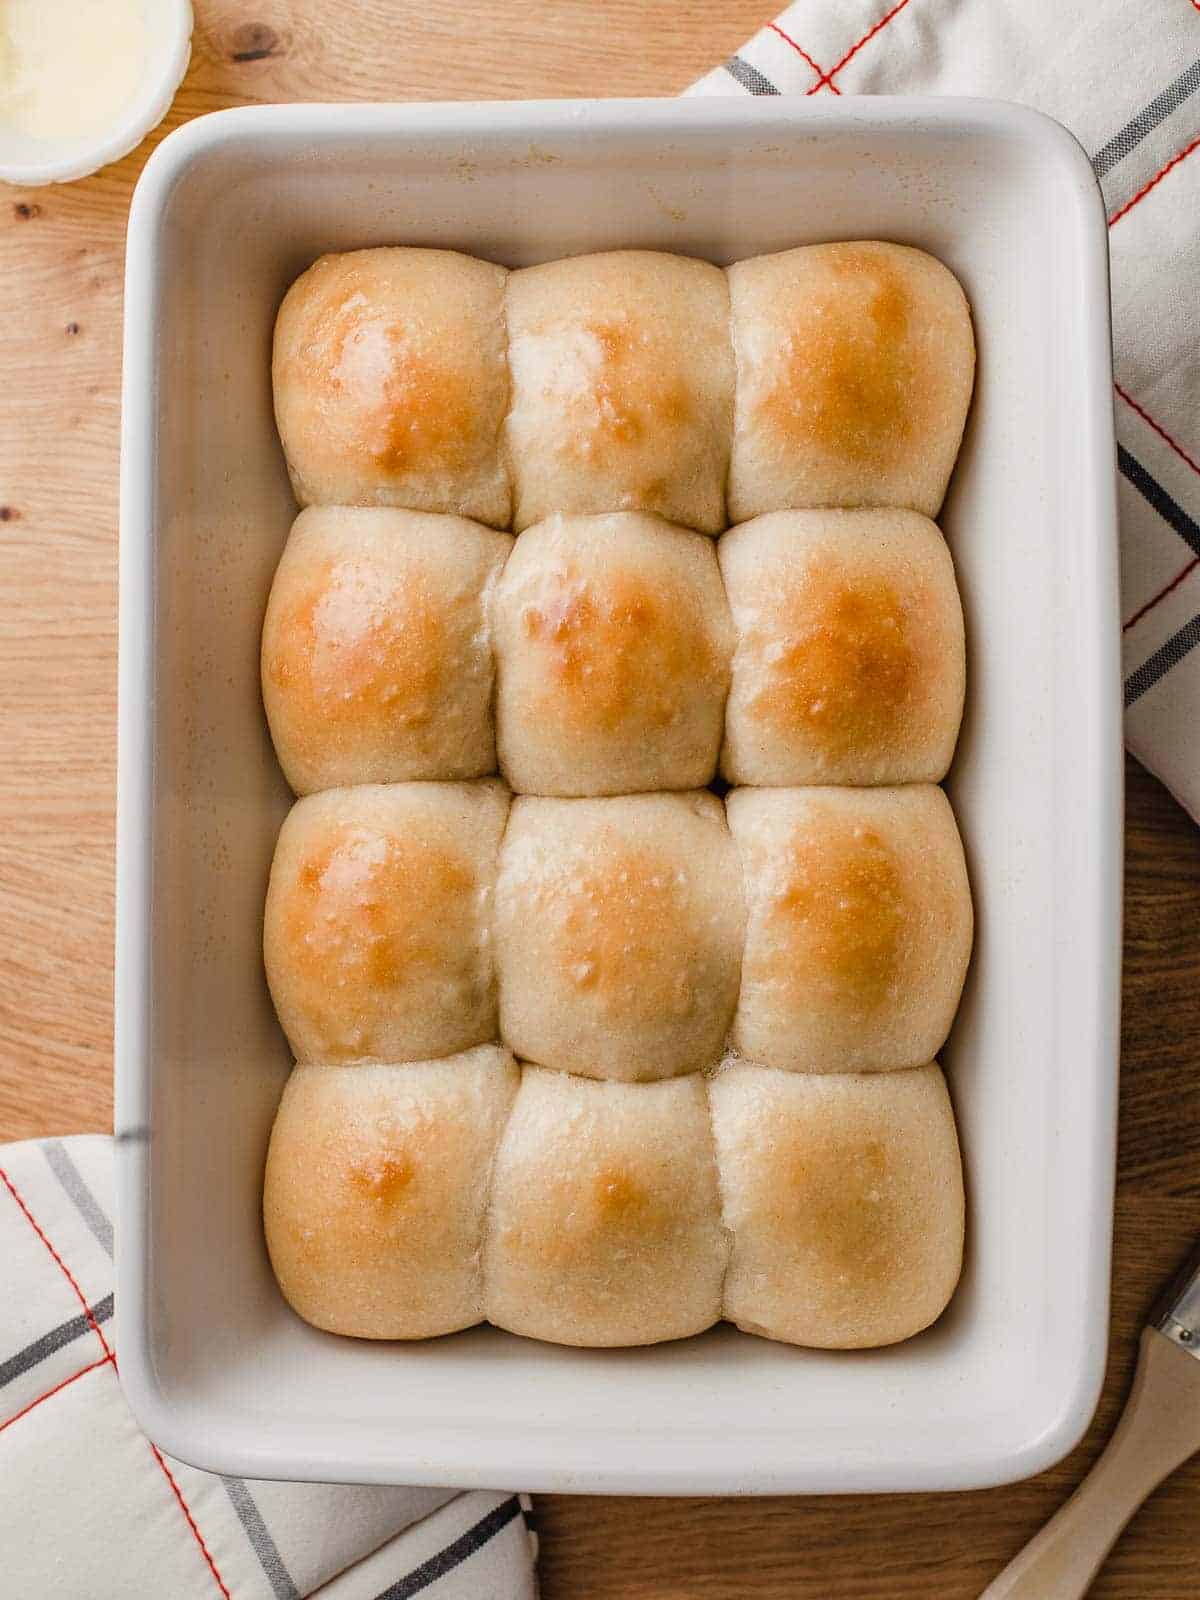 Soft sourdough dinner rolls in a baking dish.